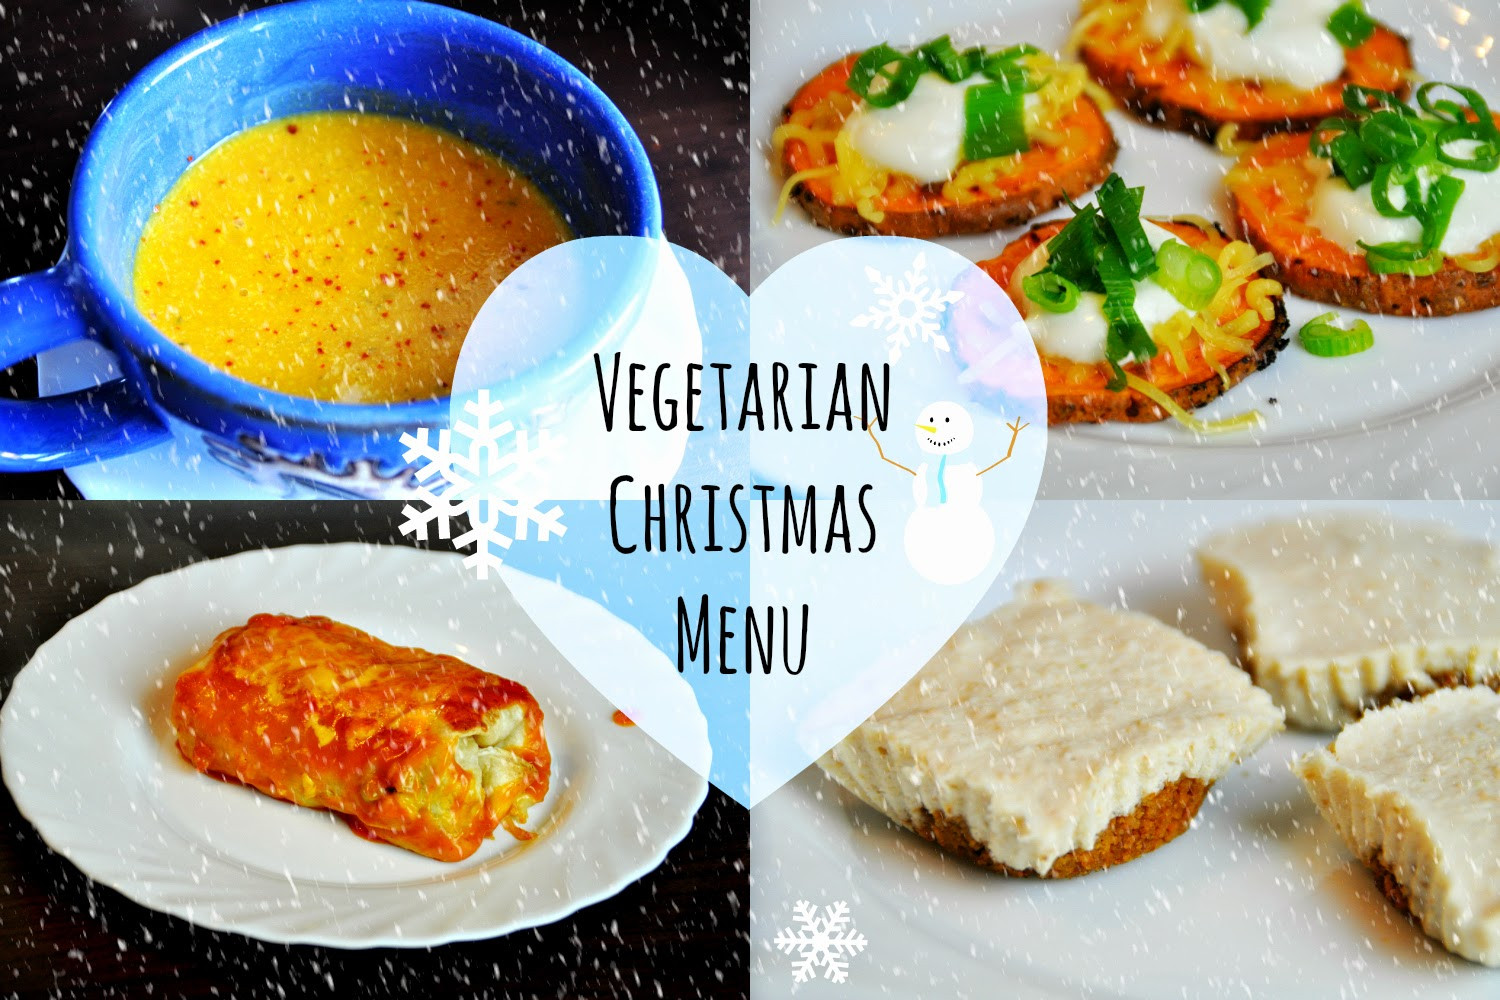 Vegetarian Christmas Dinner Menu
 Ve arian Christmas Menu